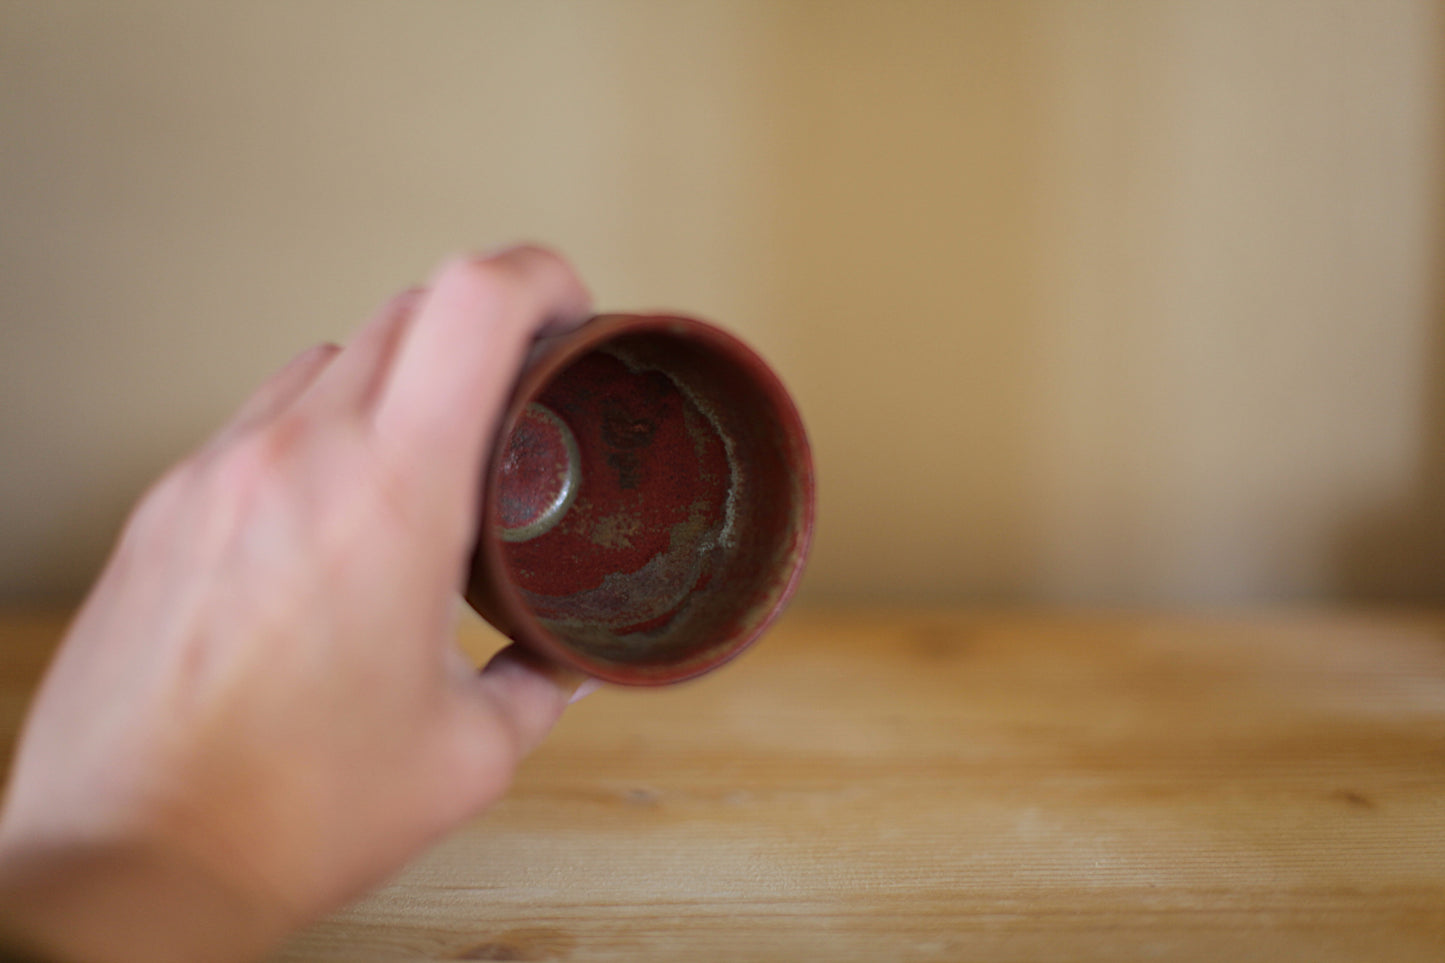 Red ash glaze yunomi - porcelanic stoneware 140 ml